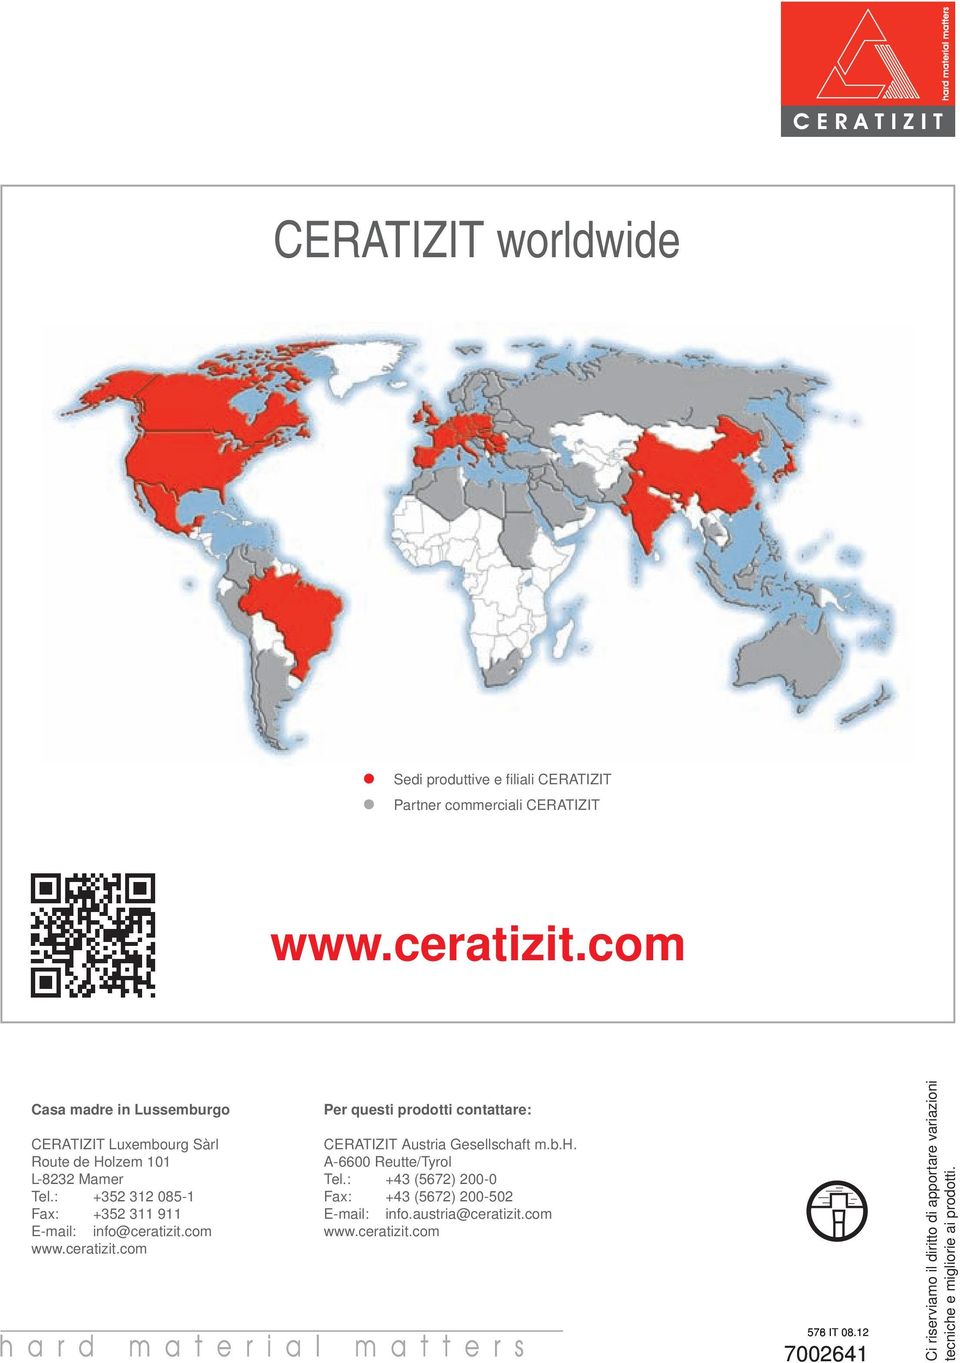 : +352 312 085-1 Fax: +352 311 911 E-mail: info@ceatizit.com www.ceatizit.com Pe questi podotti contattae: CEATIZIT Austia Gesellschaft m.